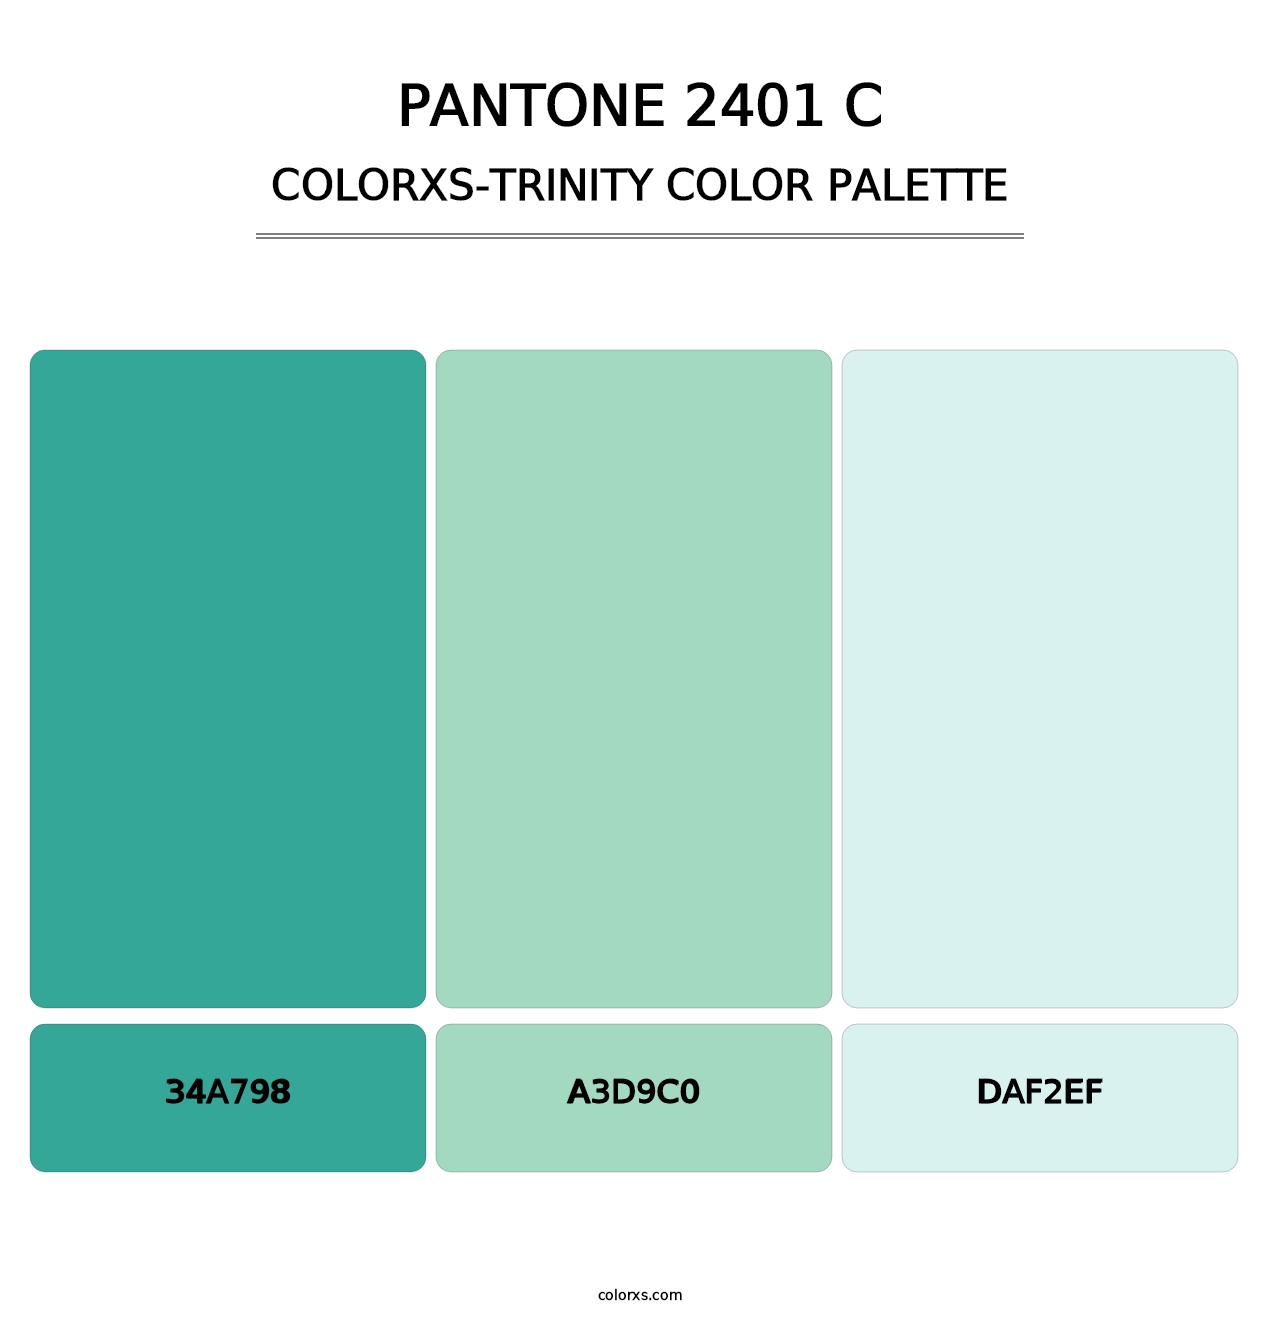 PANTONE 2401 C - Colorxs Trinity Palette